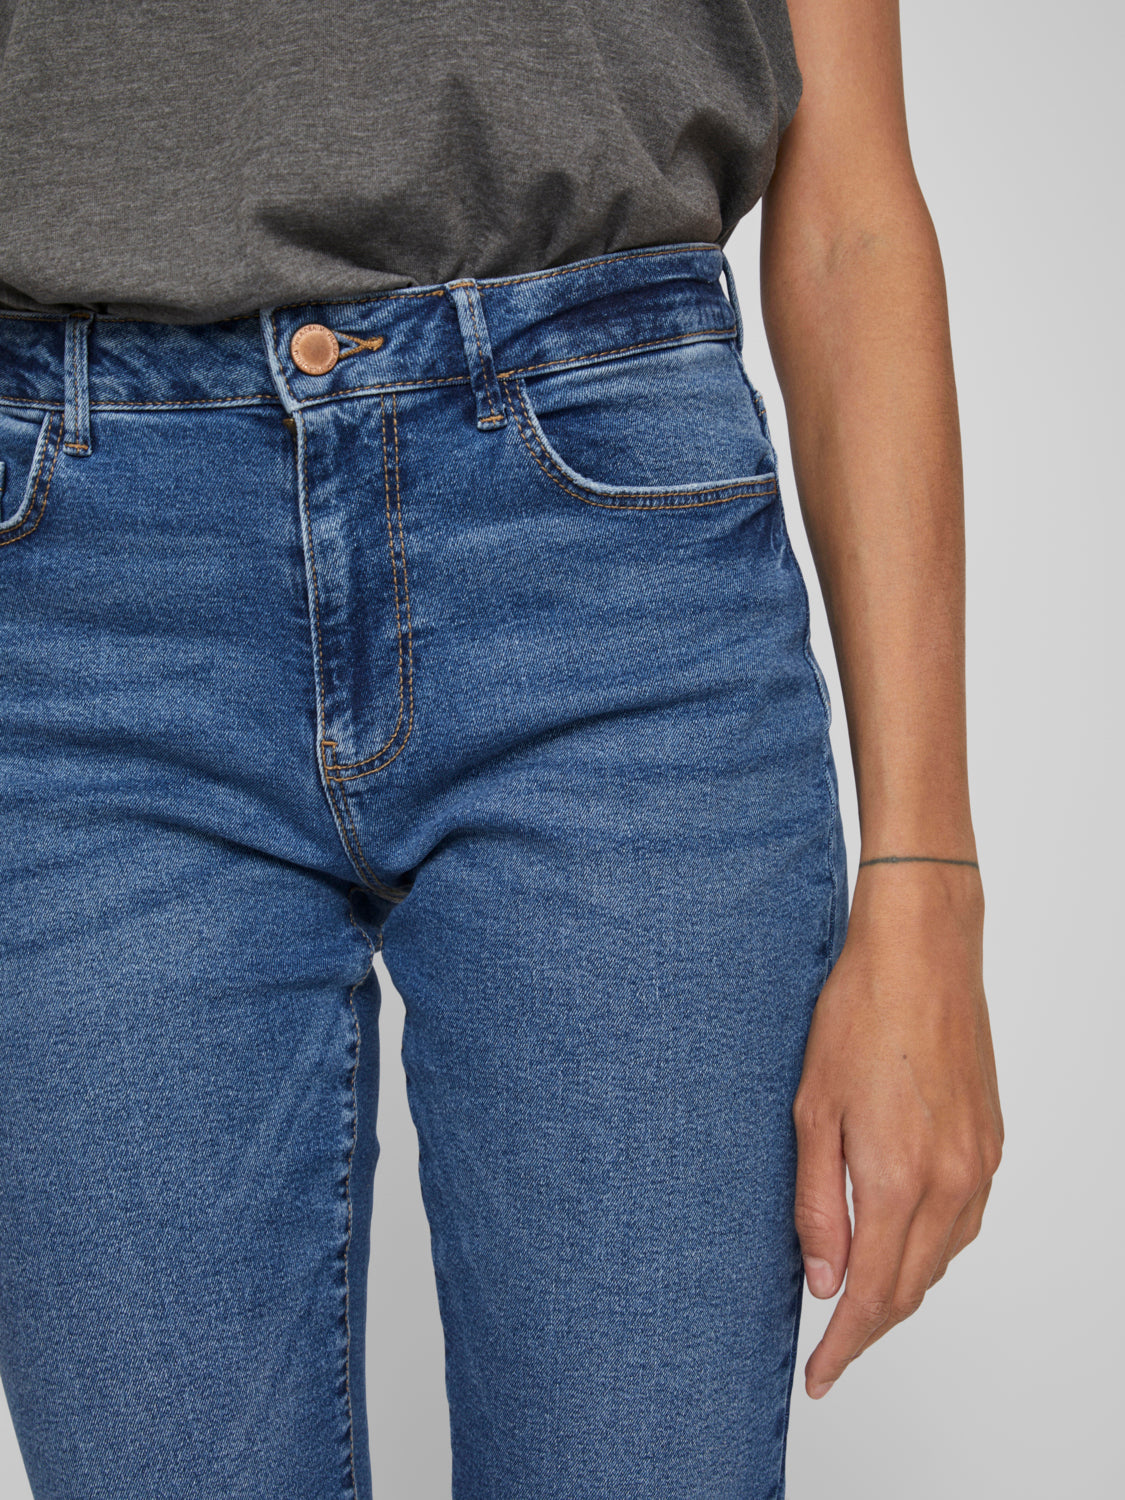 VIALICE Jeans - Medium Blue Denim